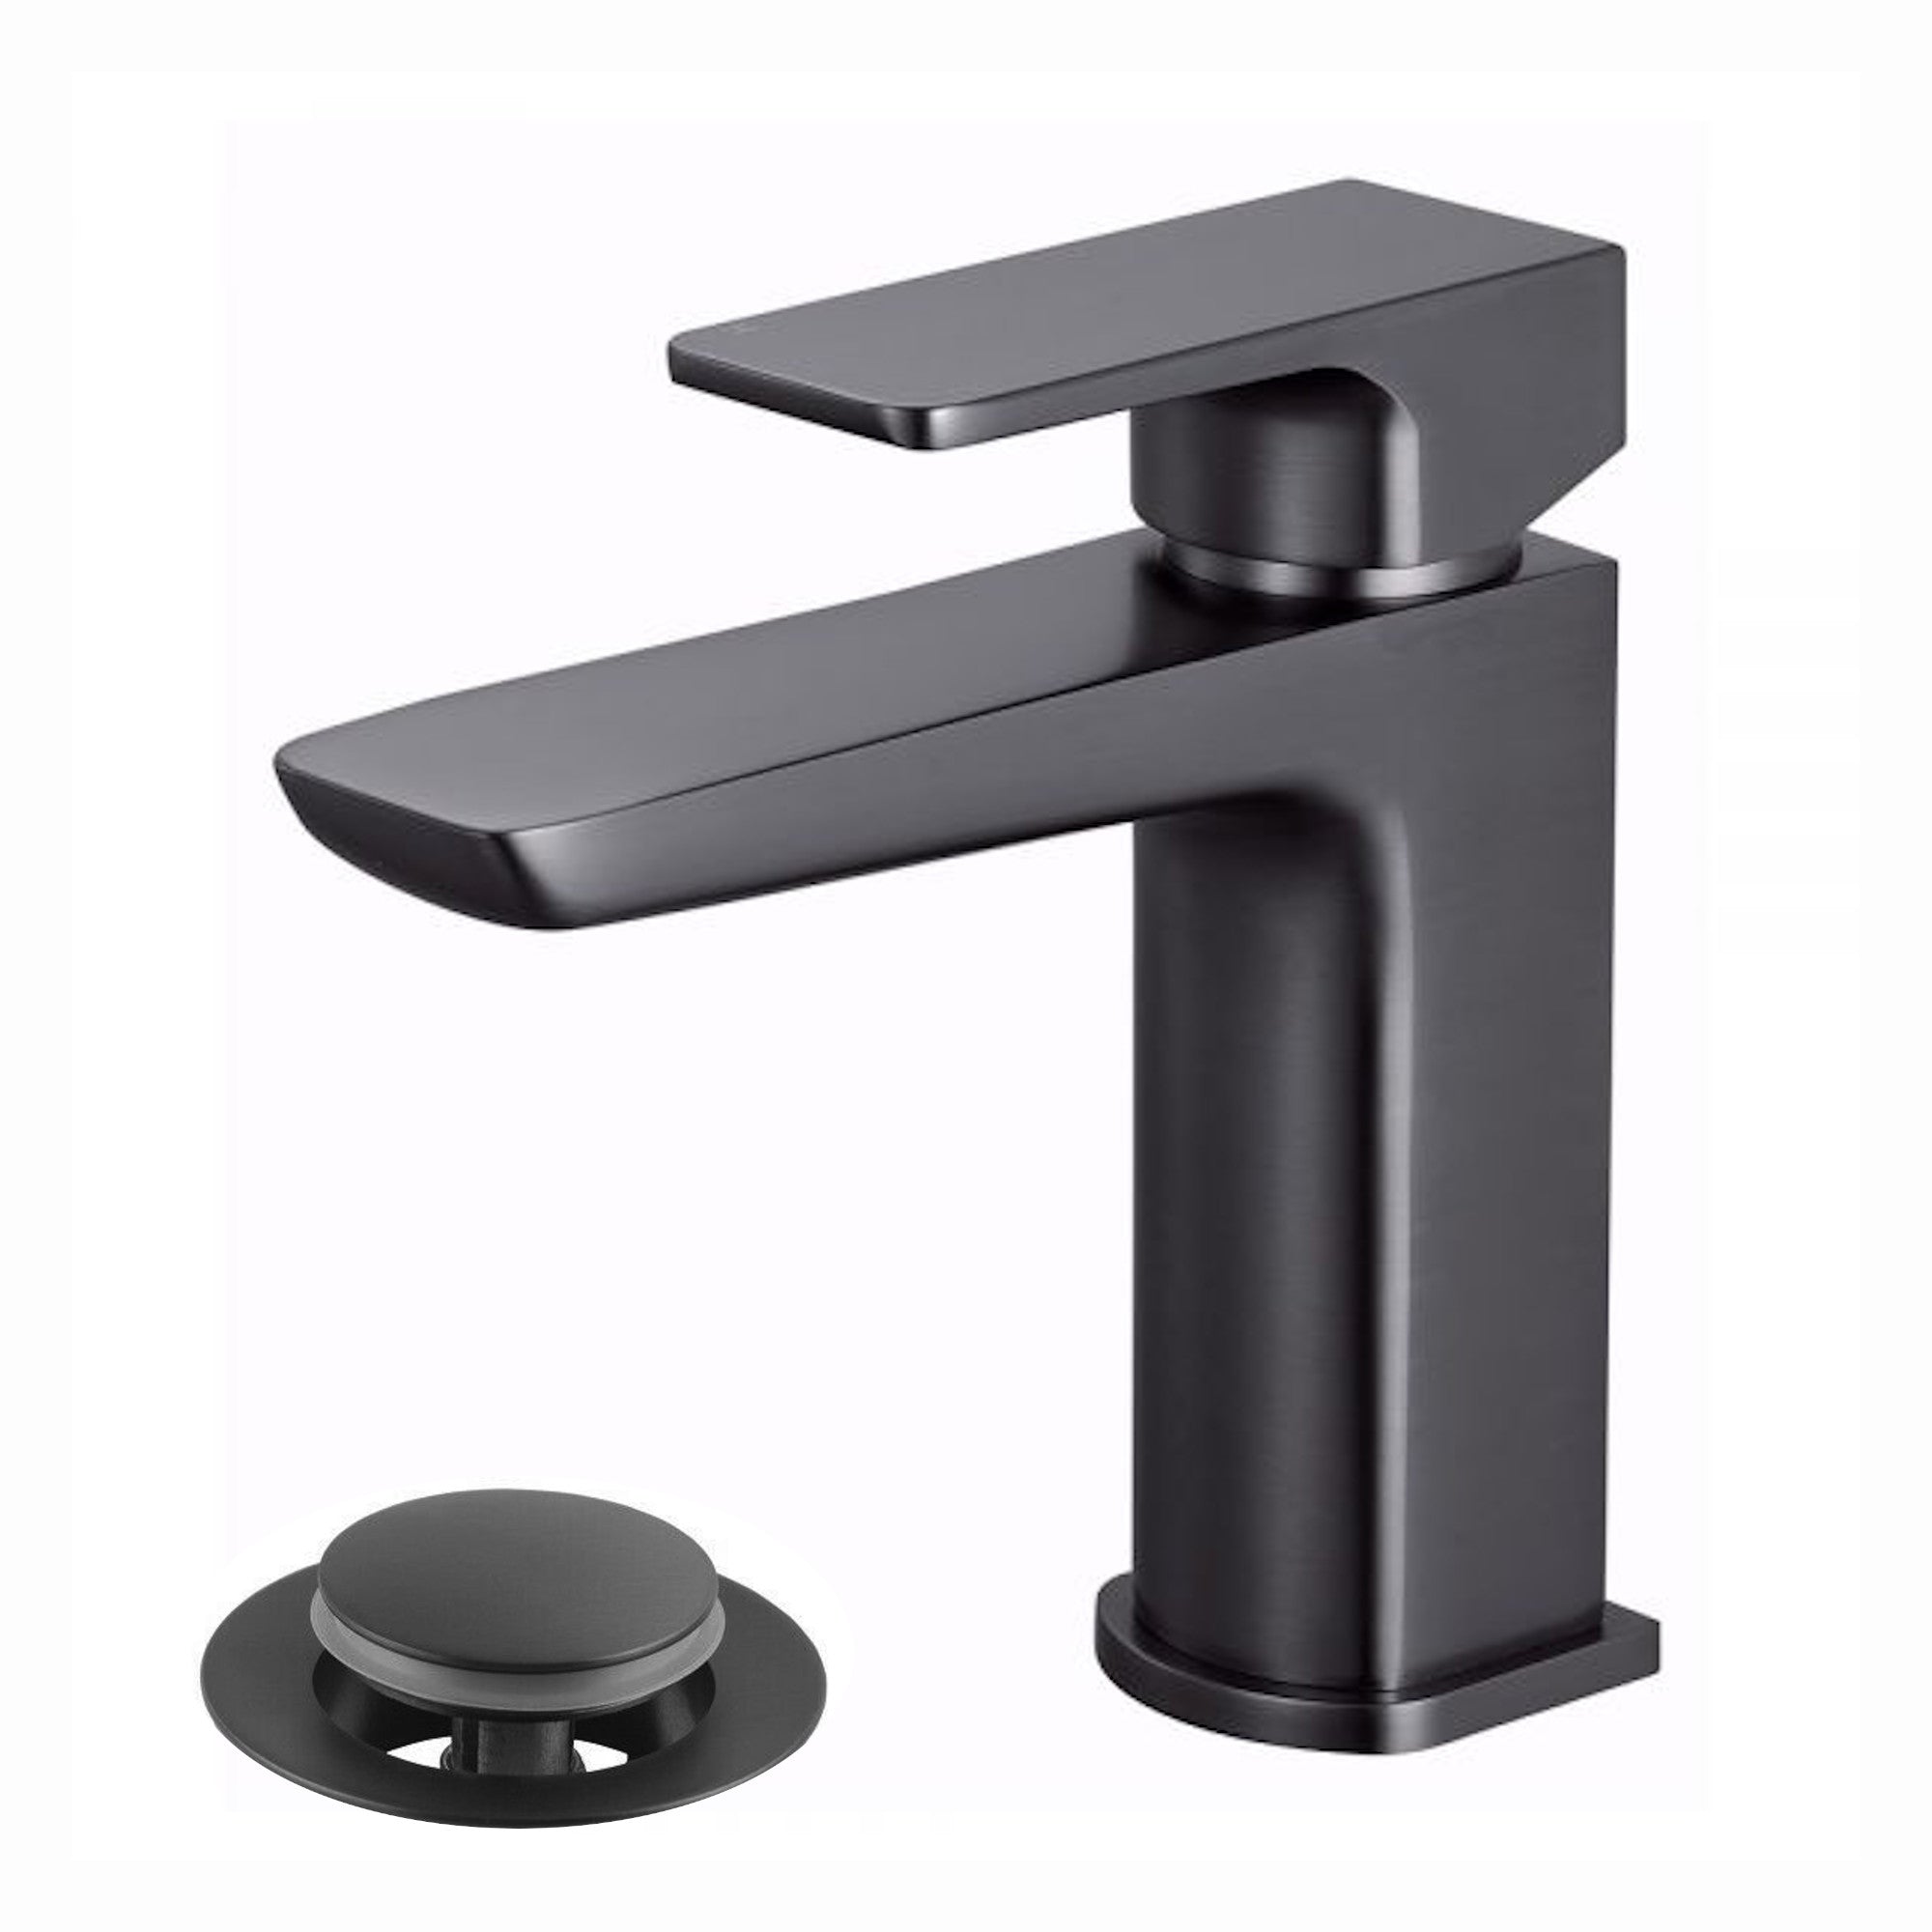 Mykonos contemporary basin sink mixer tap with waste - gunmetal black